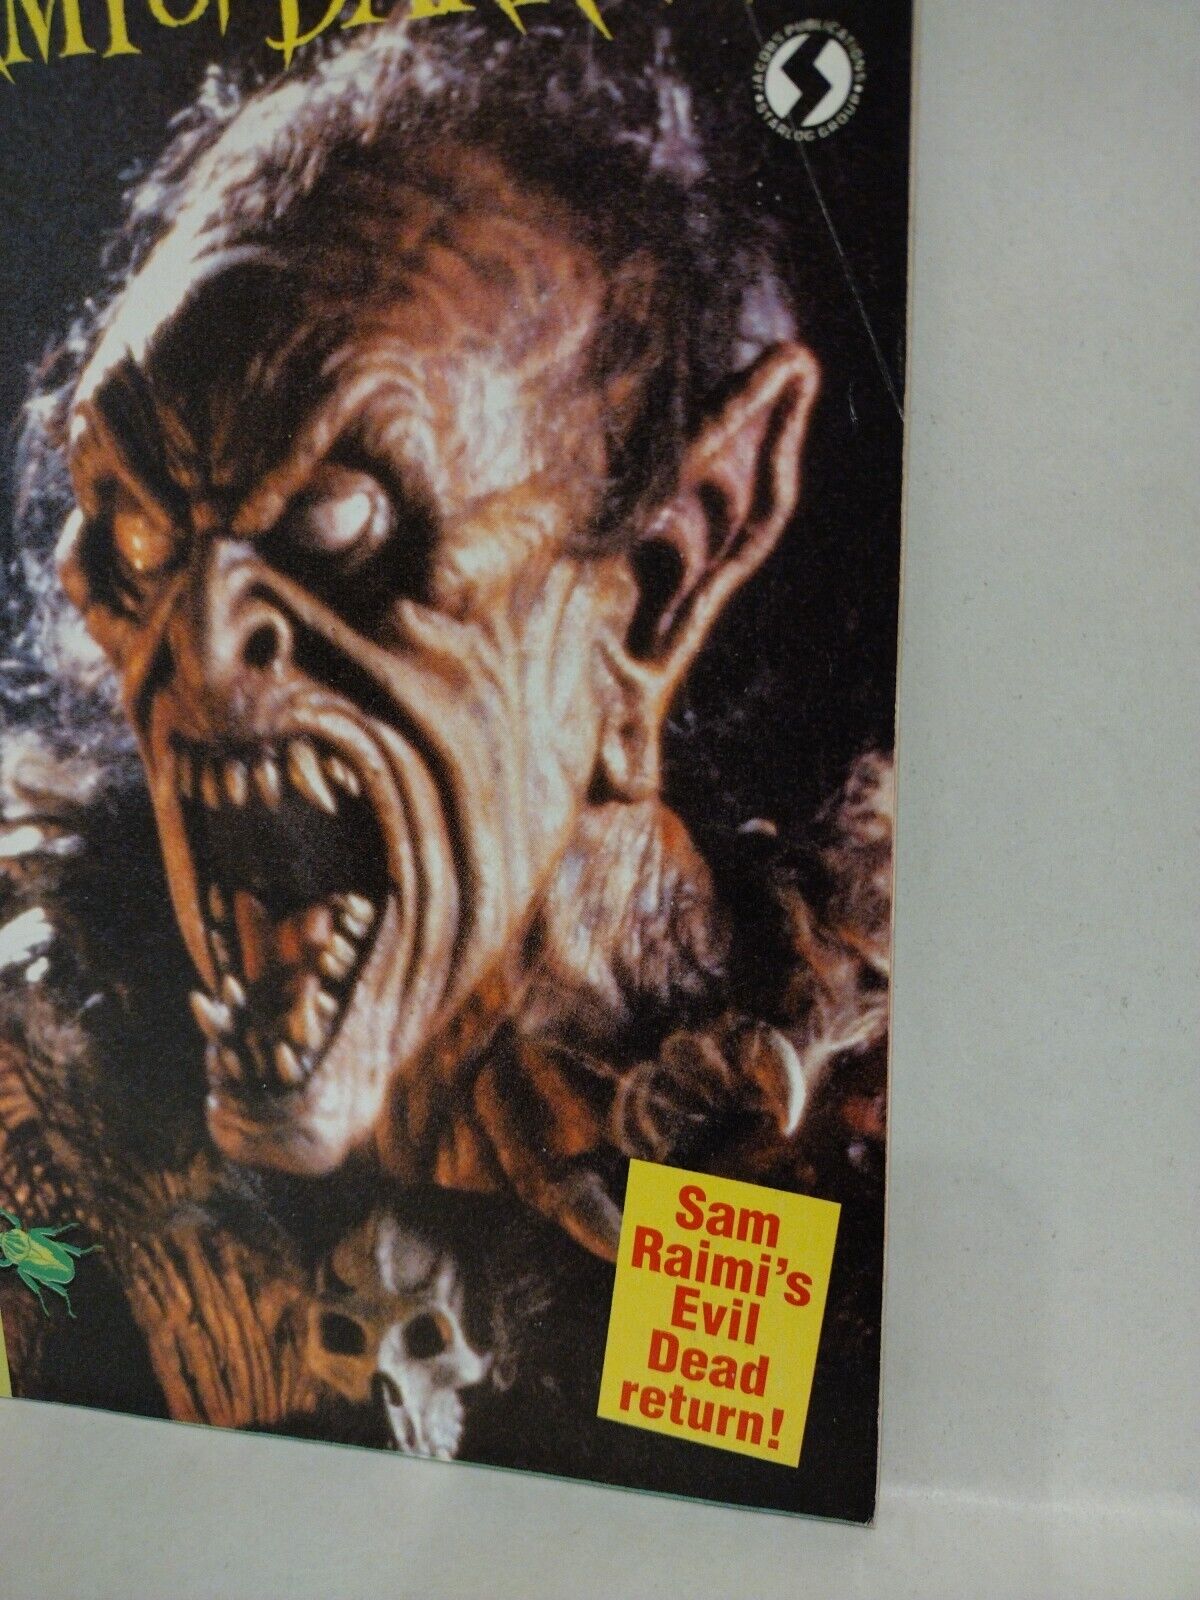 FANGORIA Magazine #115 (1992) Army Of Darkness Batman Pet Cemetery II Braindead